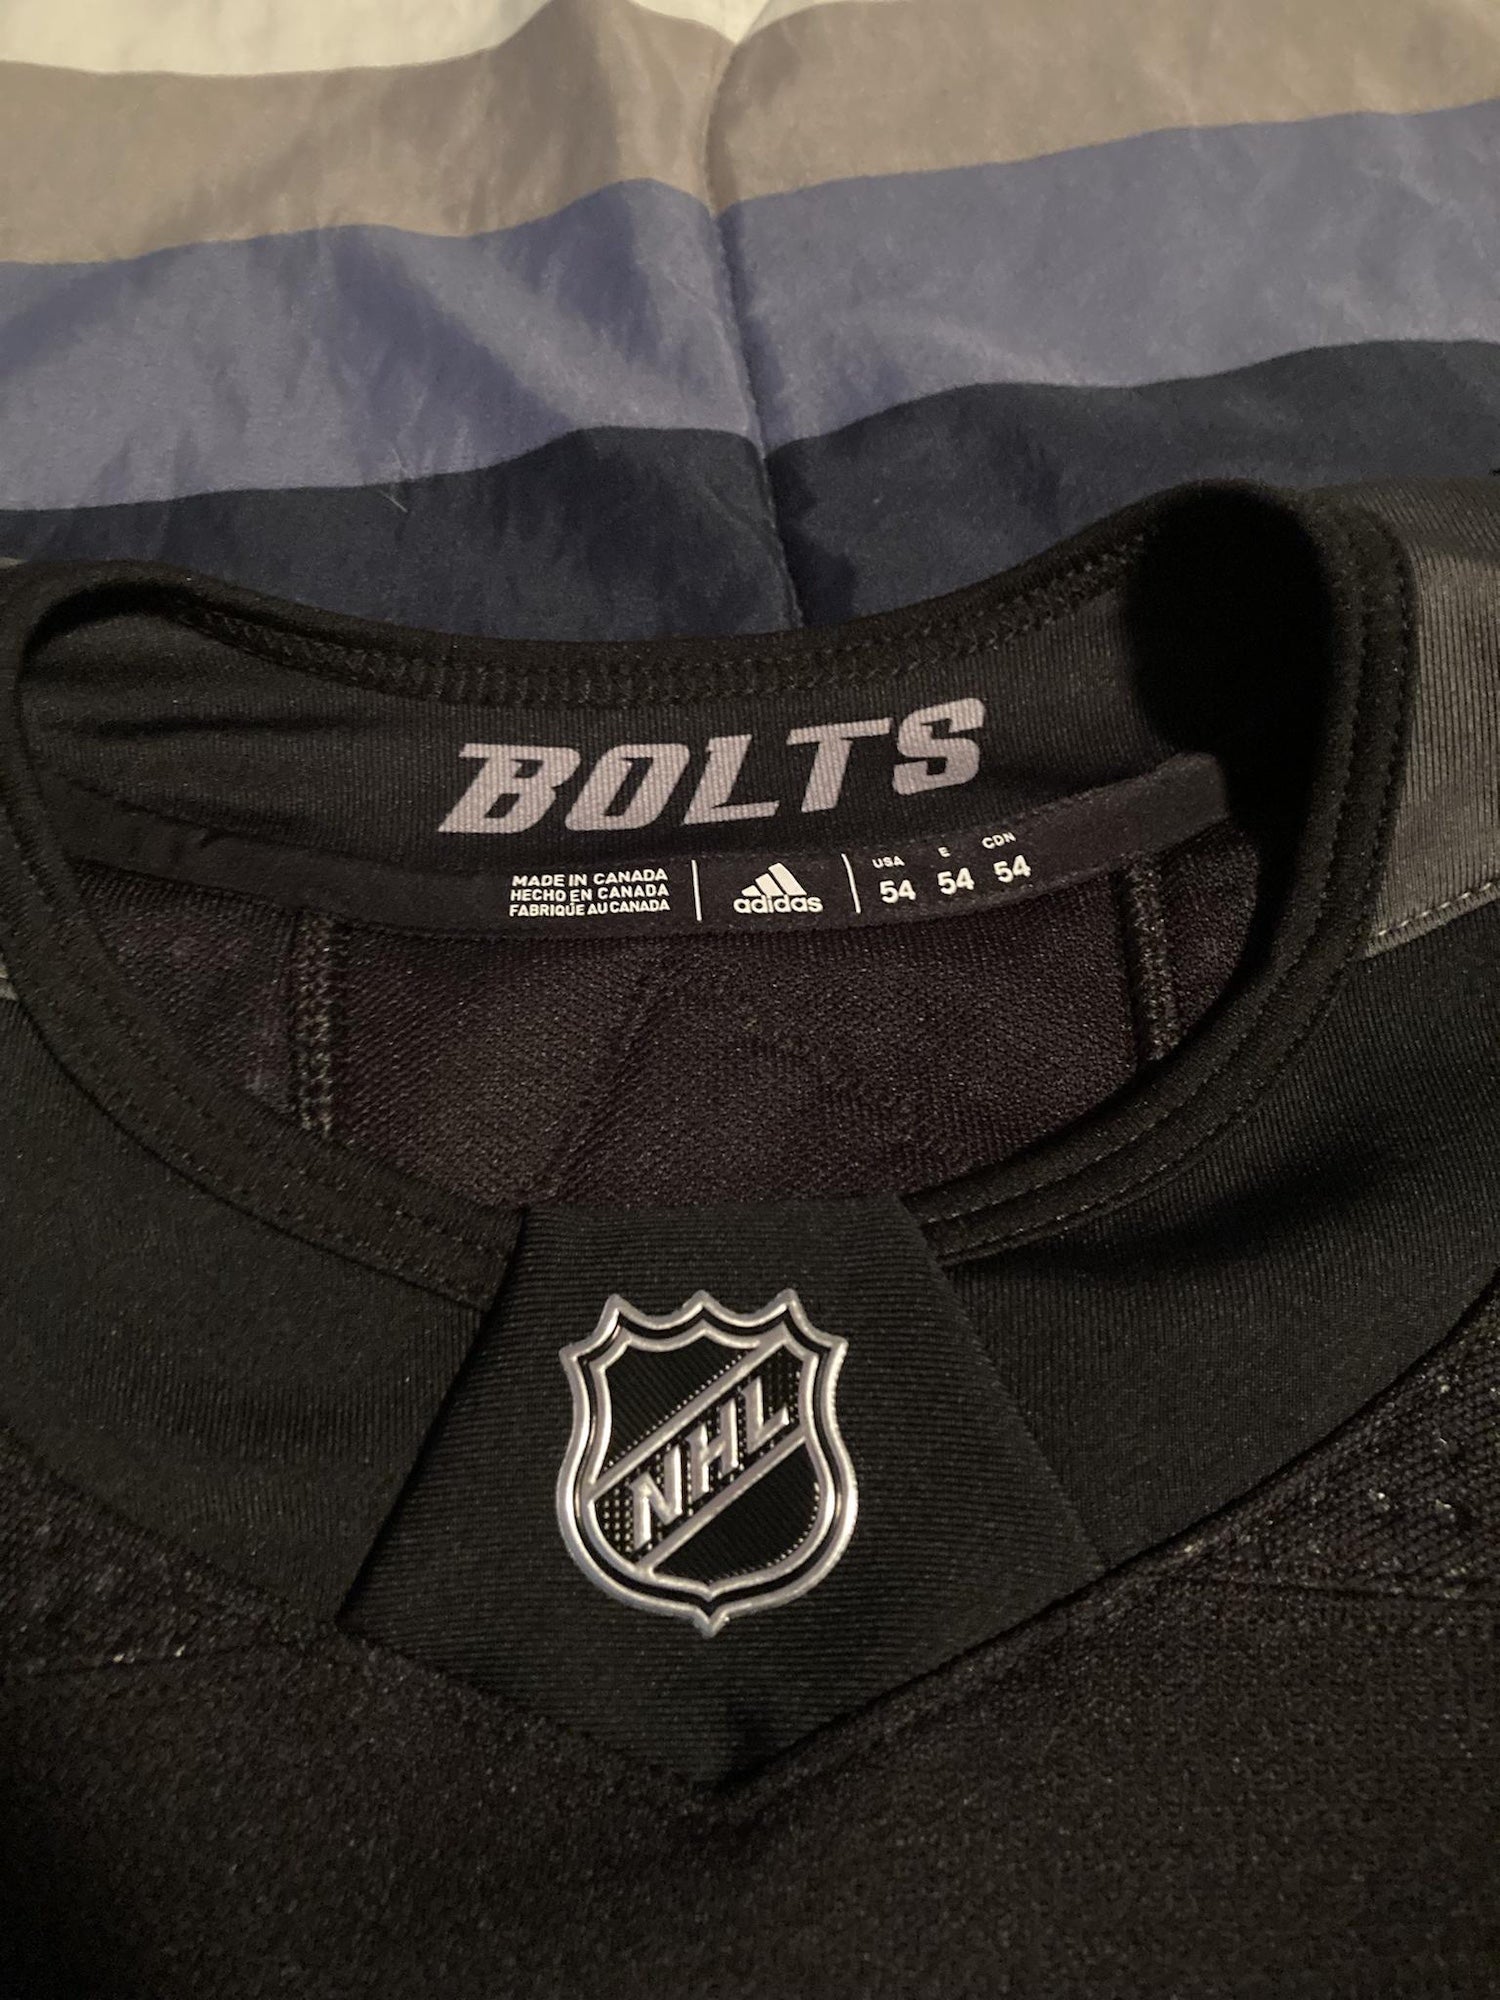 Tampa Bay Lightning Adidas Authentic Third Alternate NHL Hockey Jersey